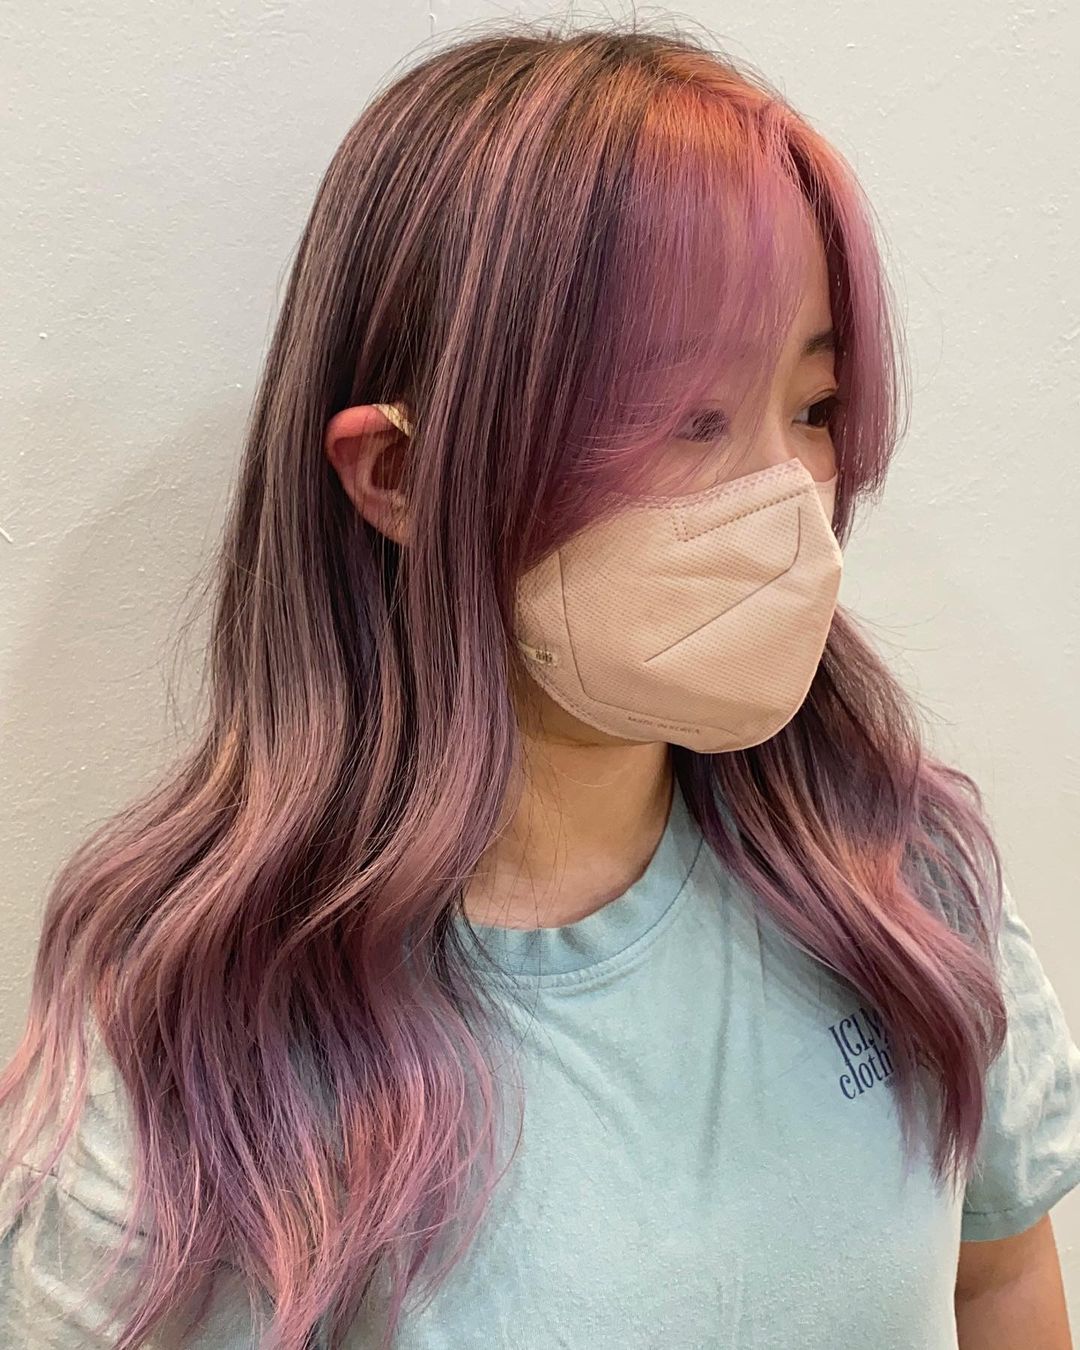 wanita asia dengan rambut panjang bergelombang warna pink highlight